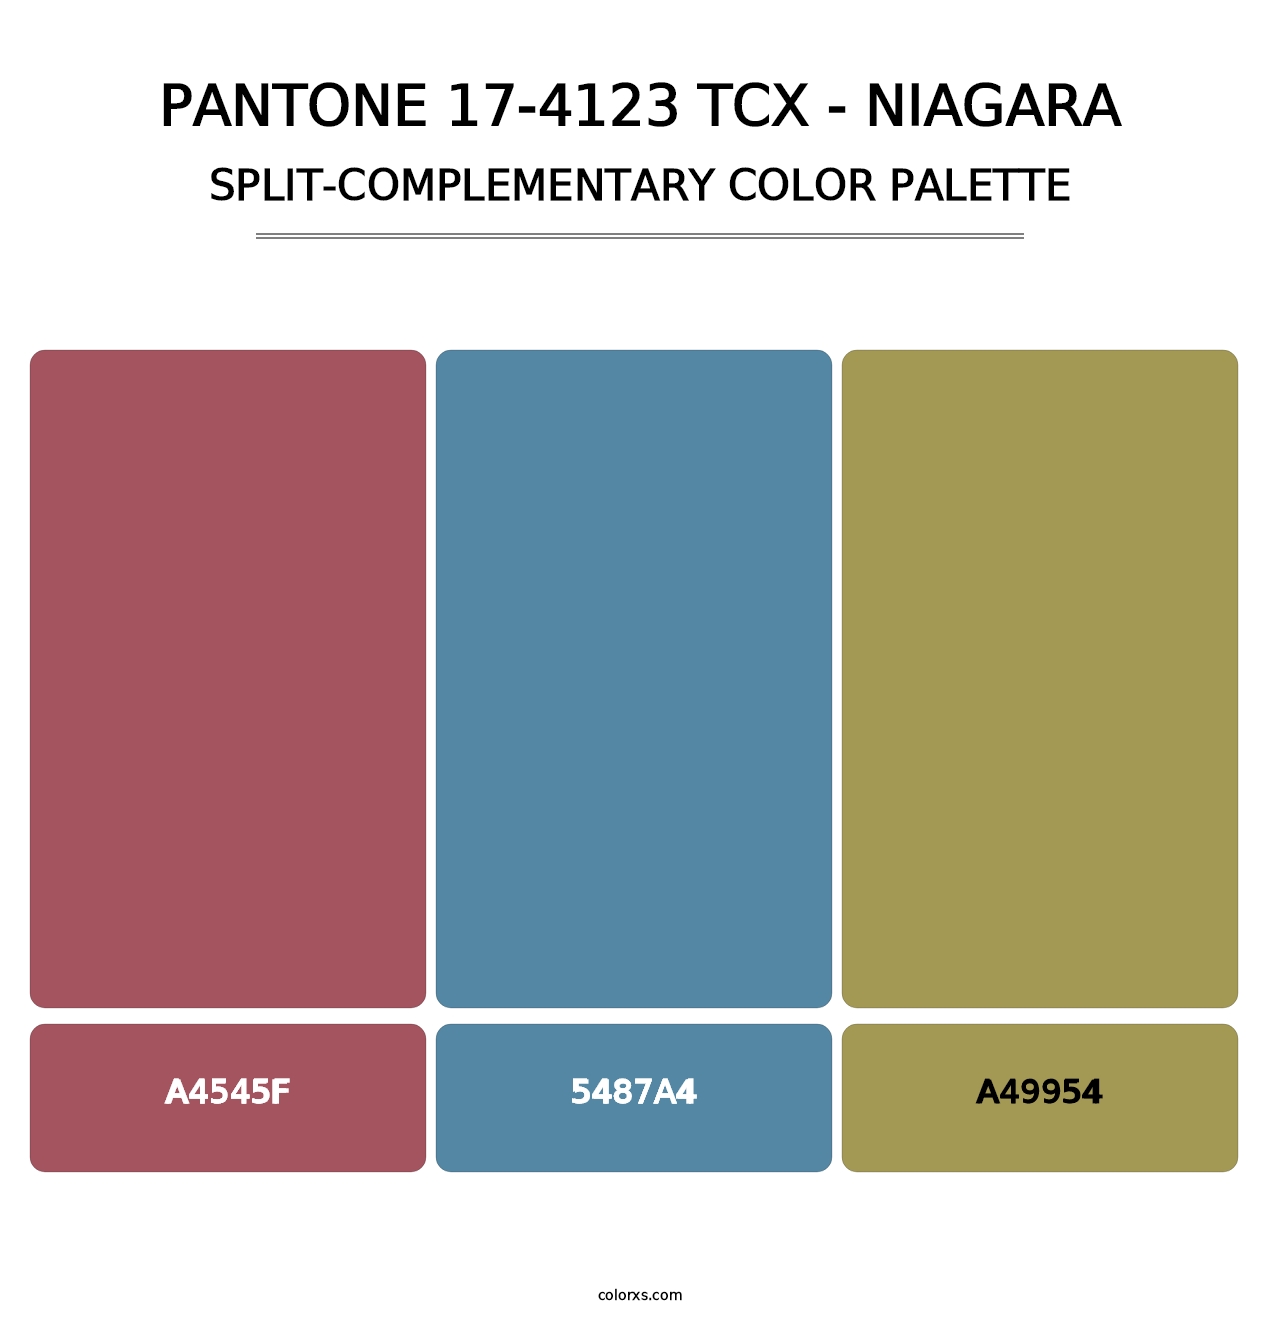 PANTONE 17-4123 TCX - Niagara - Split-Complementary Color Palette